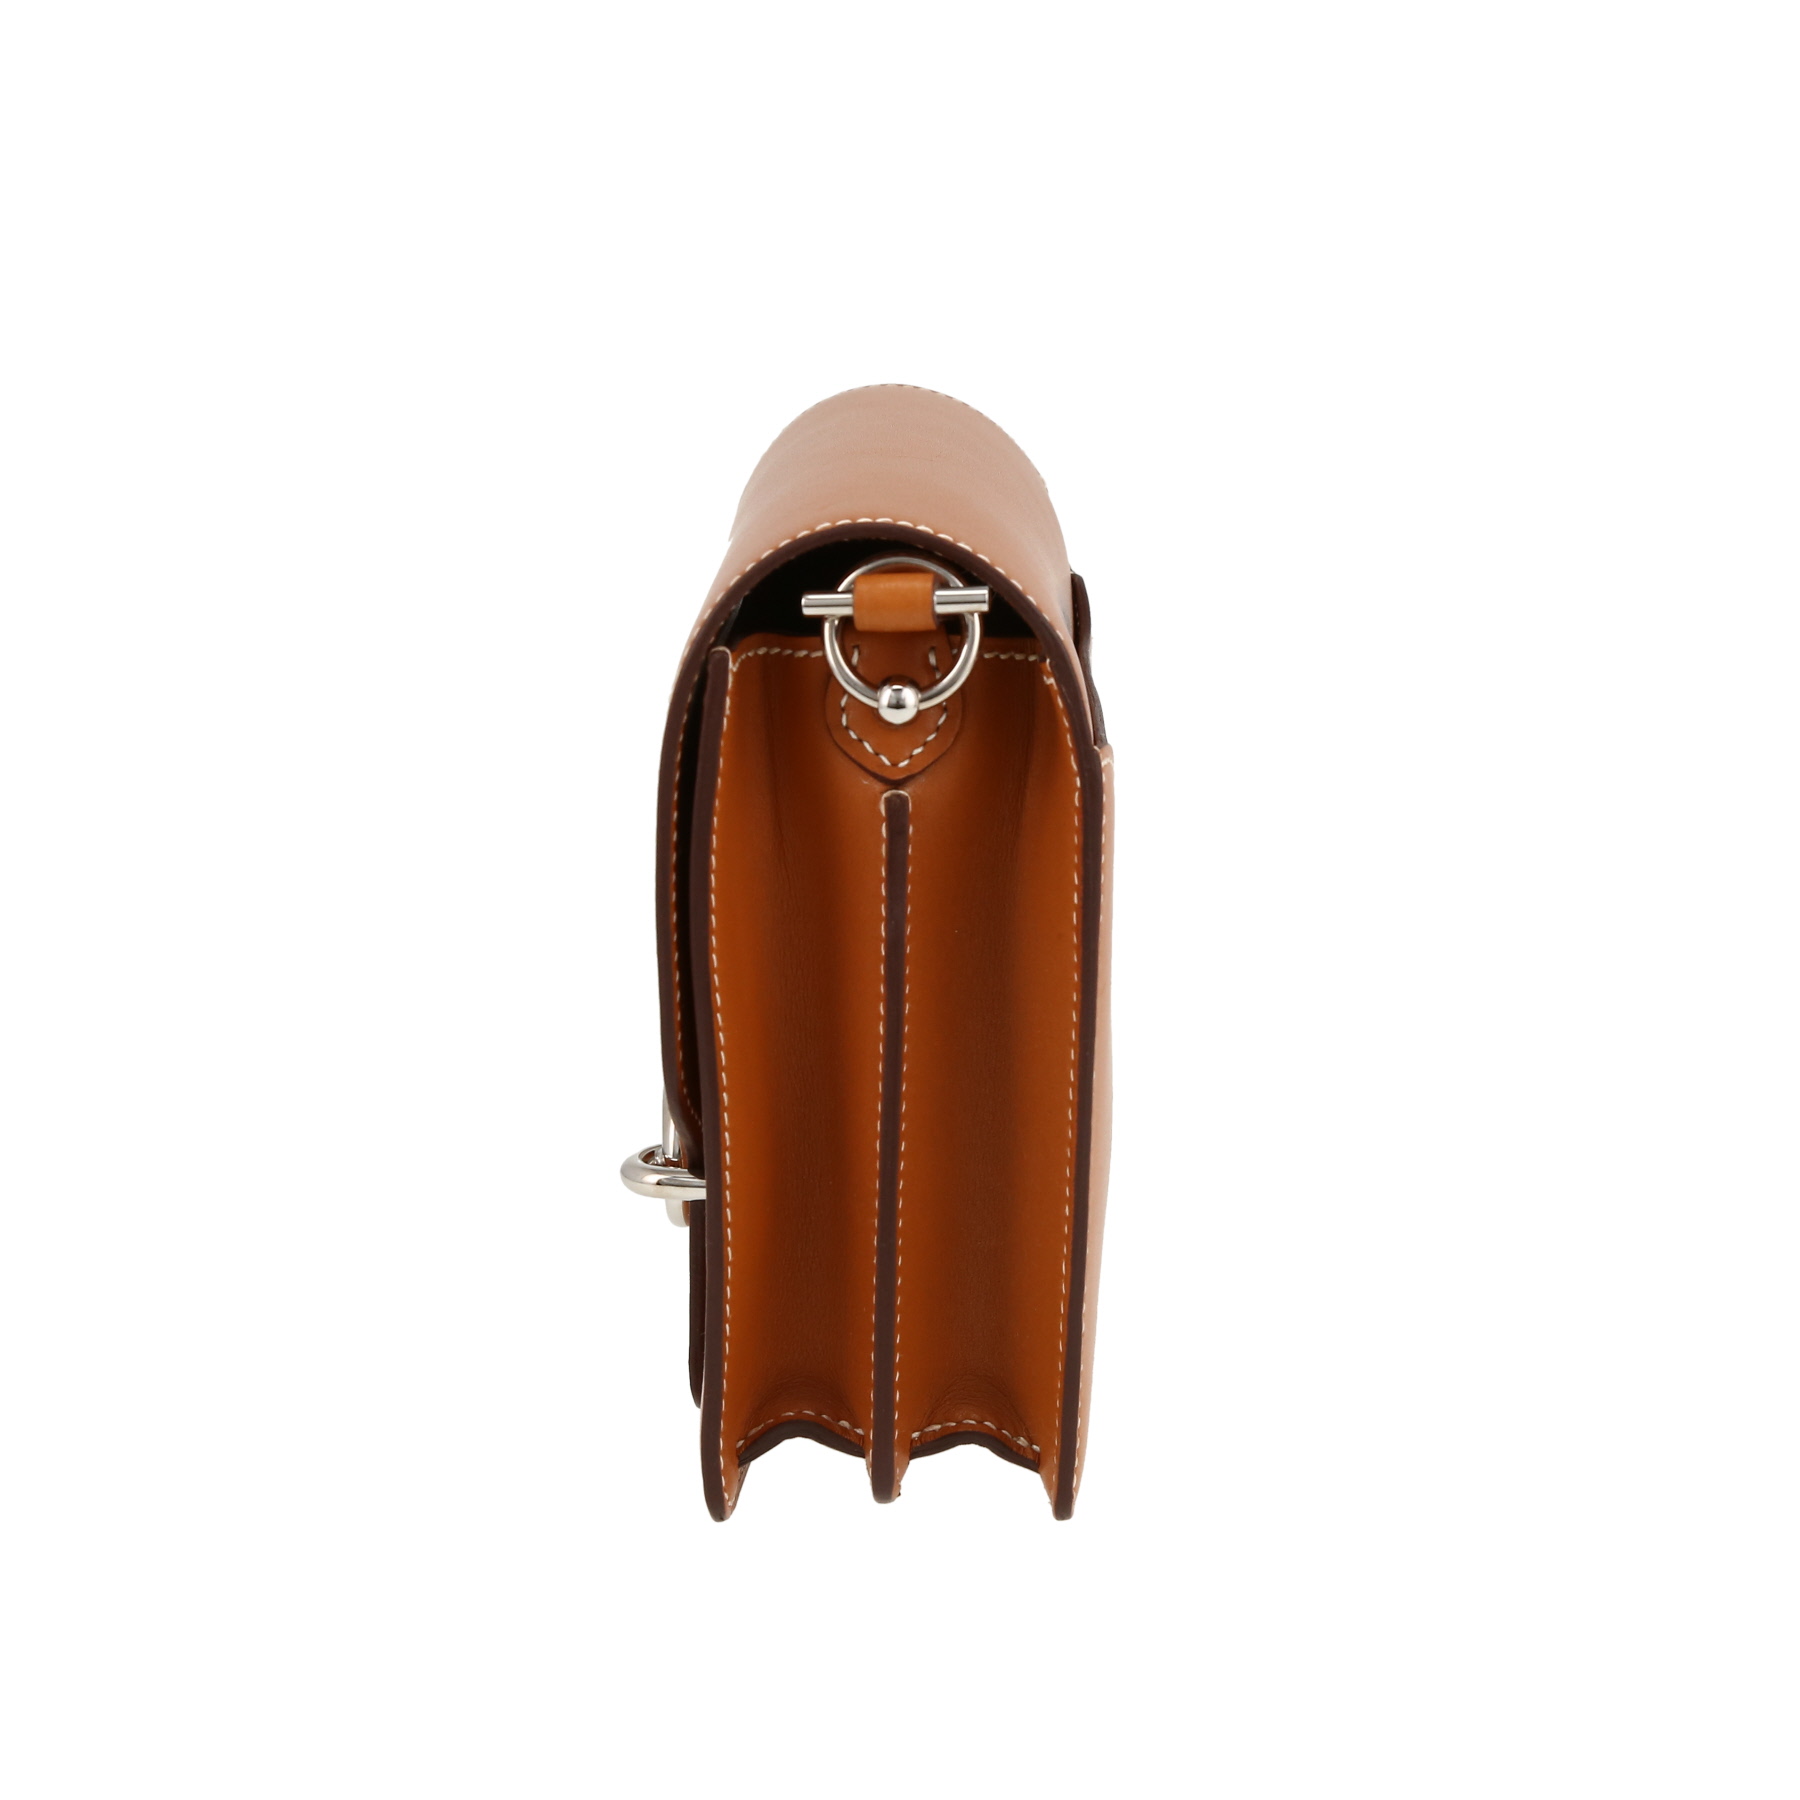 Roulis Shoulder Bag In Swift Leather